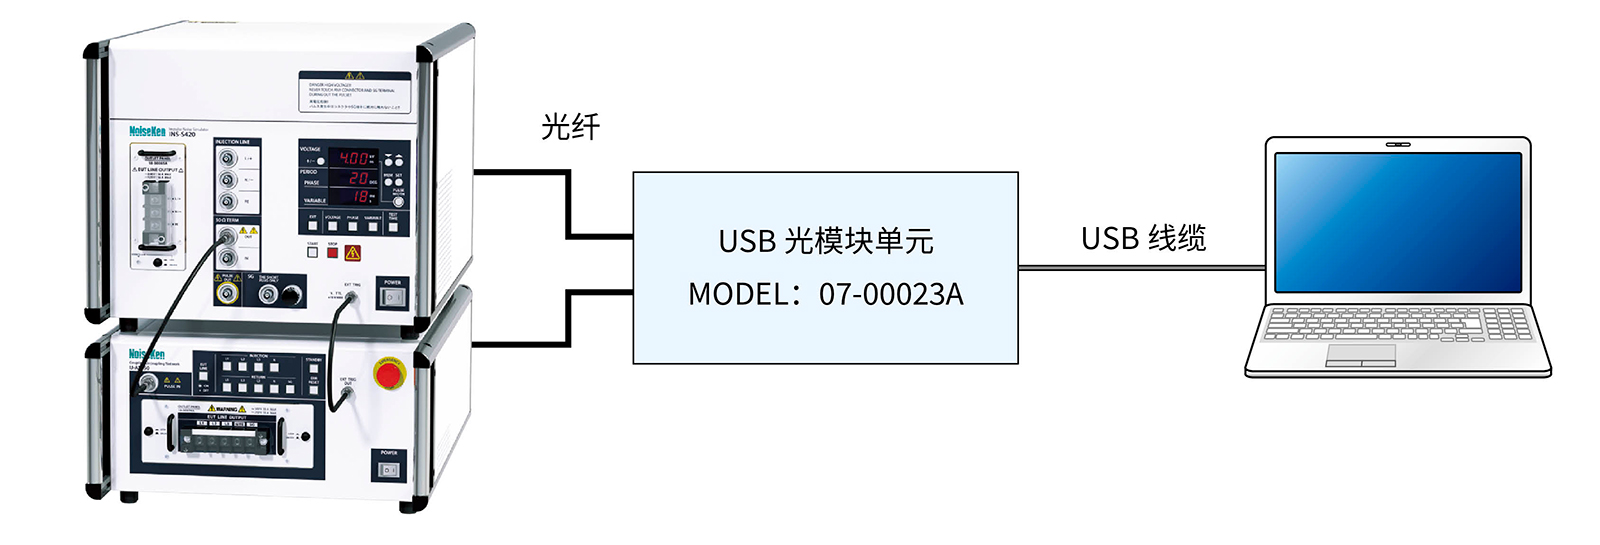 INS-S420远程控制软件　INS-S420 RemoteW 型号:14-00062A